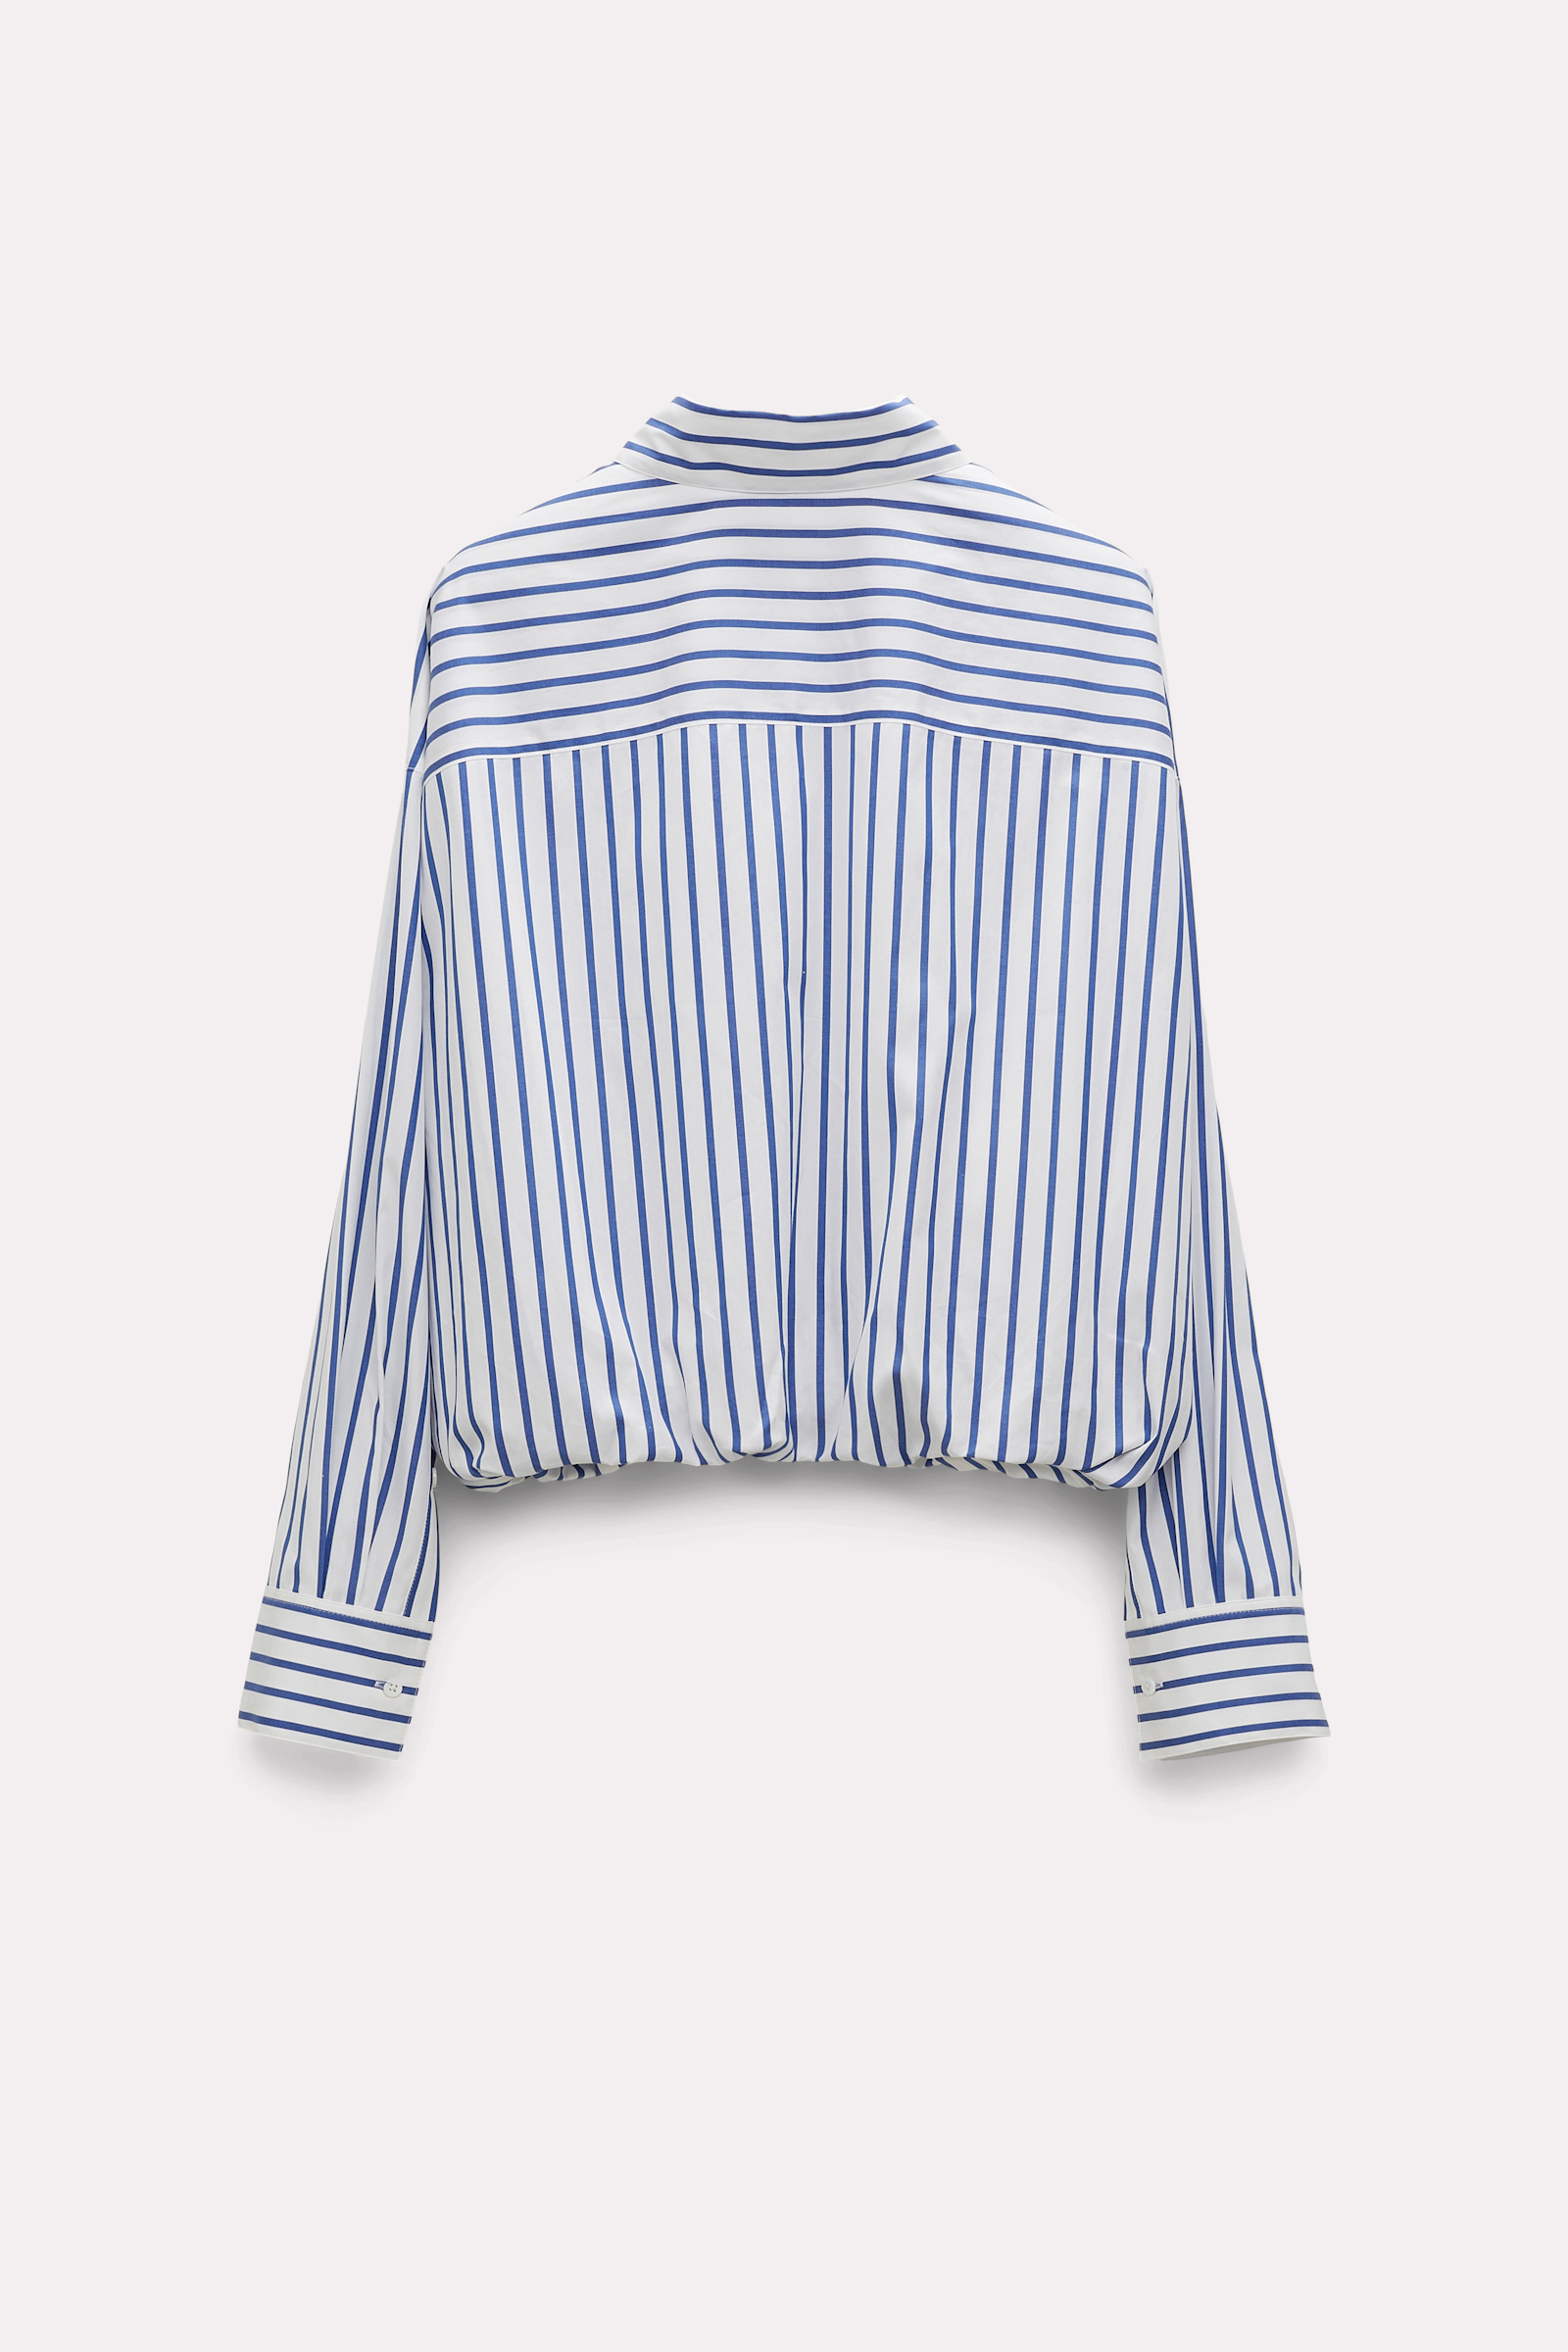 Dorothee Schumacher Striped cotton shirt with balloon hem navy & white stripes